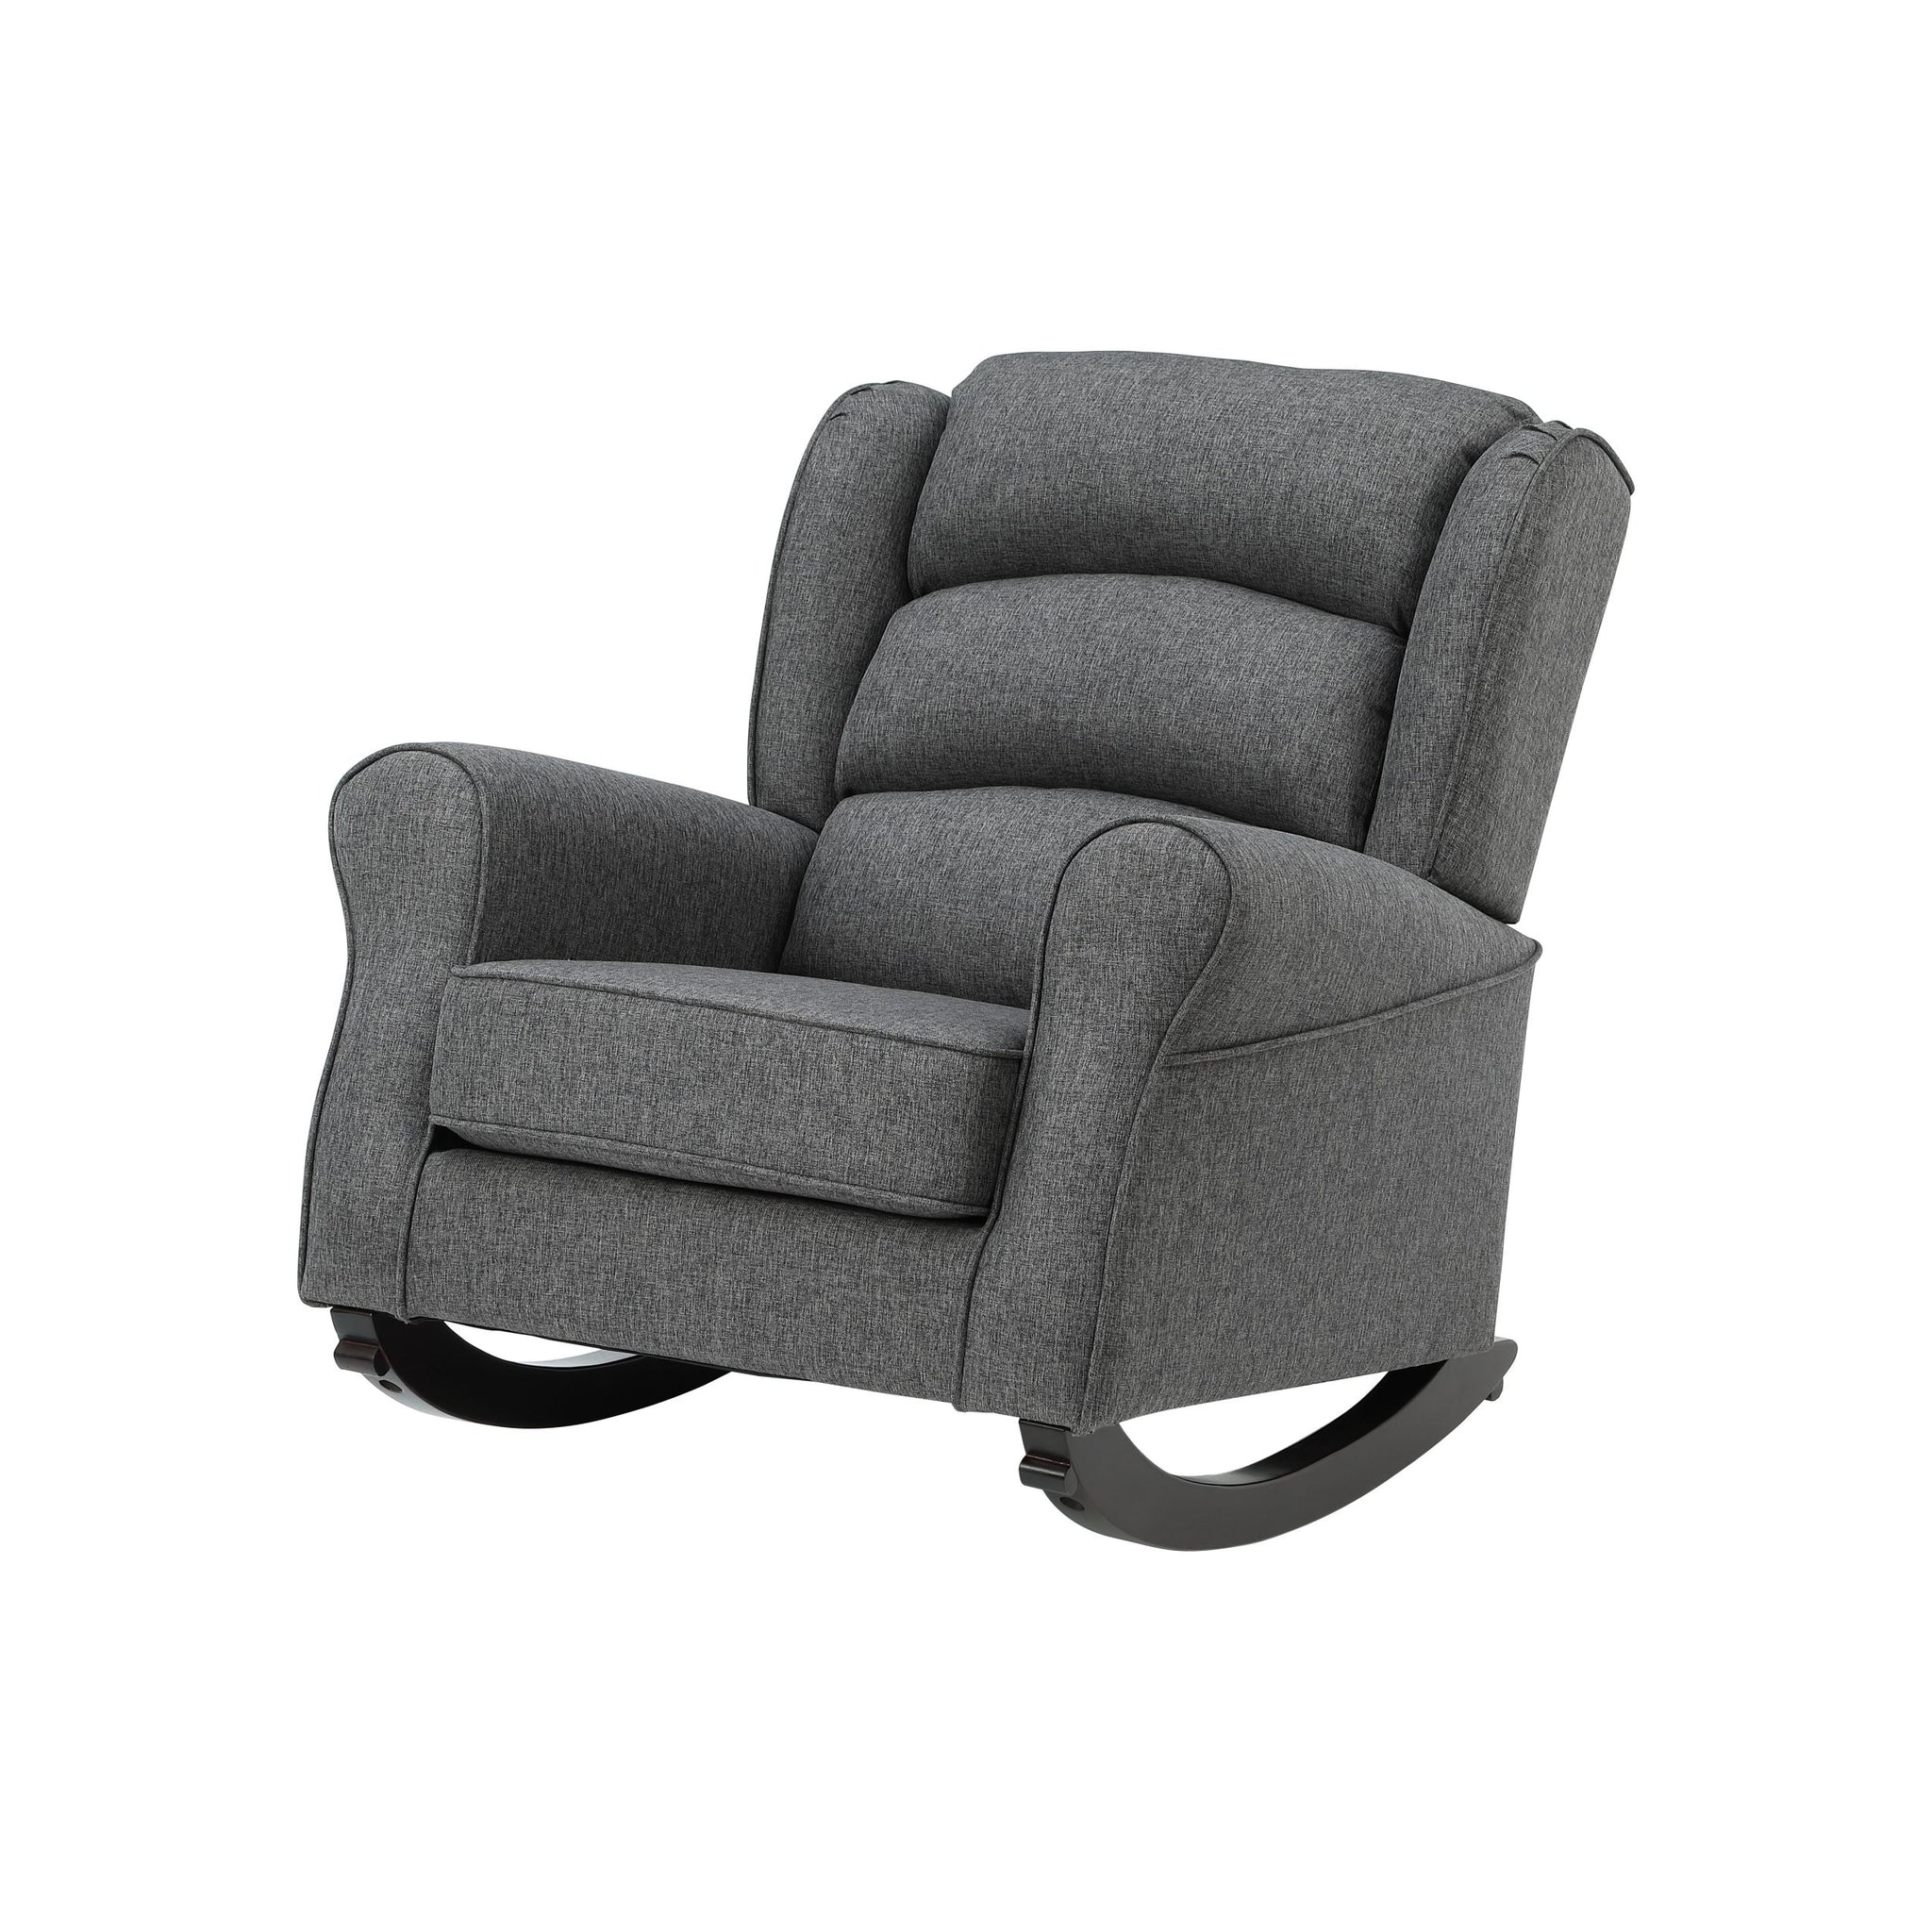 Acme Fabien Rocking Chair, Gray Fabric Ac02183